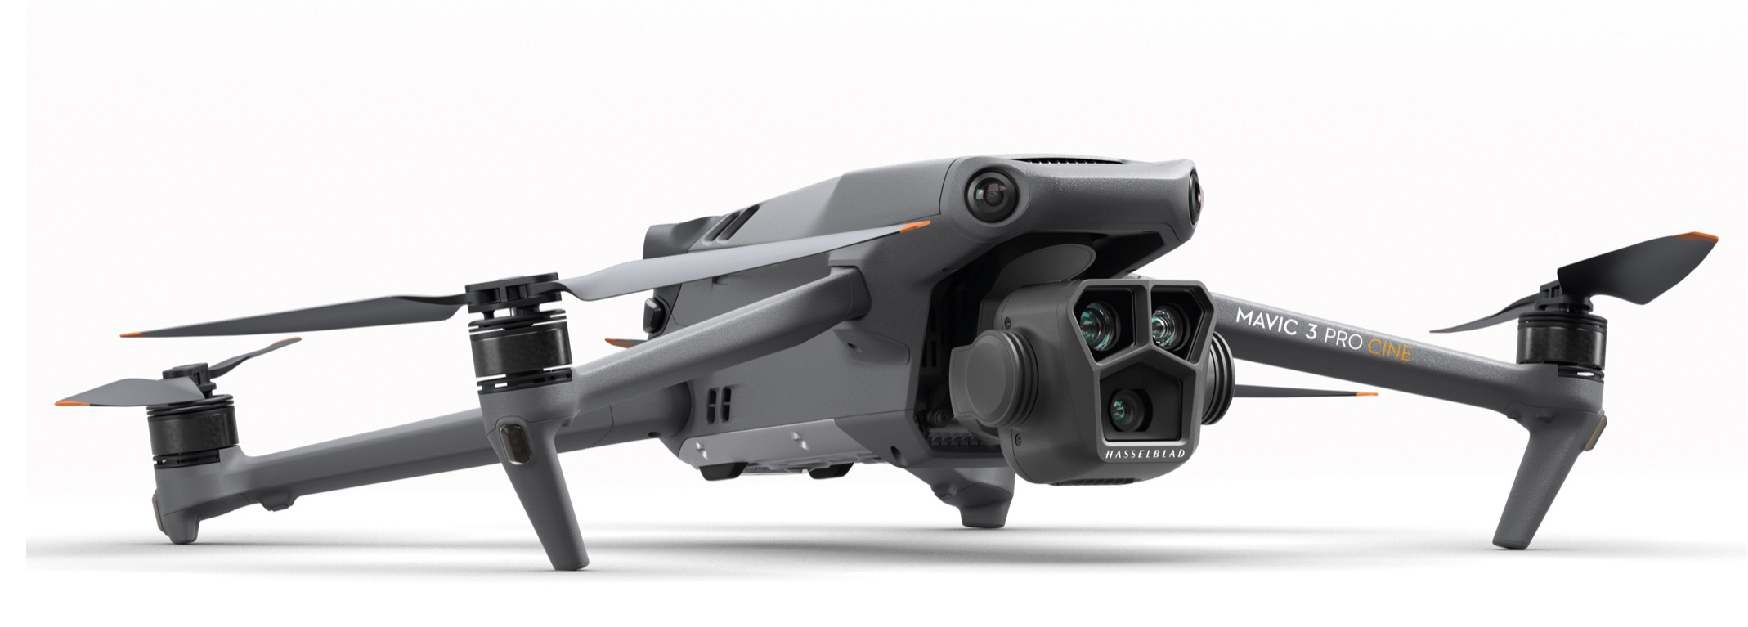 Droneleader drone Sardegna - Rilievi mavic 3 pro cine cinema inspire